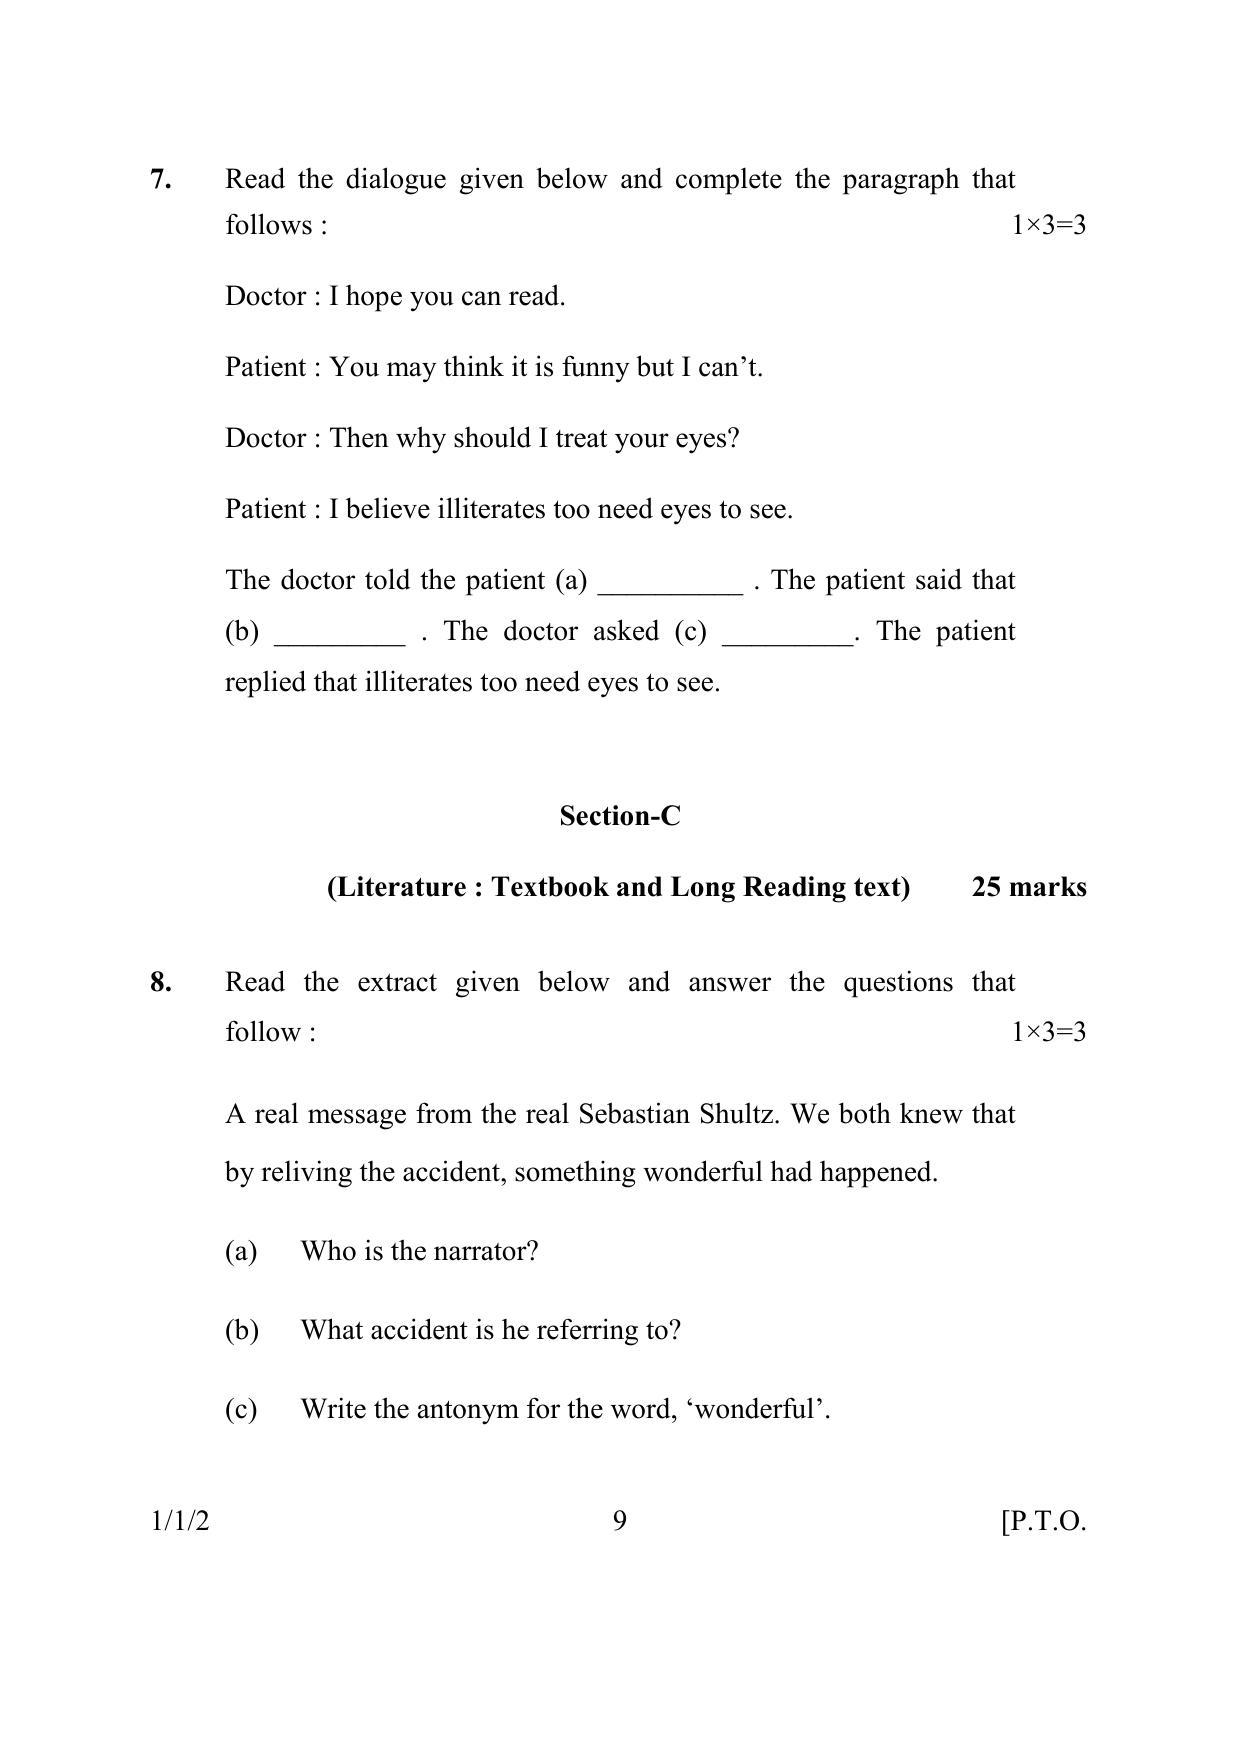 CBSE Class 10 1-1-2 ENGLISH COMMUNICATIVE 2016 Question Paper - Page 9